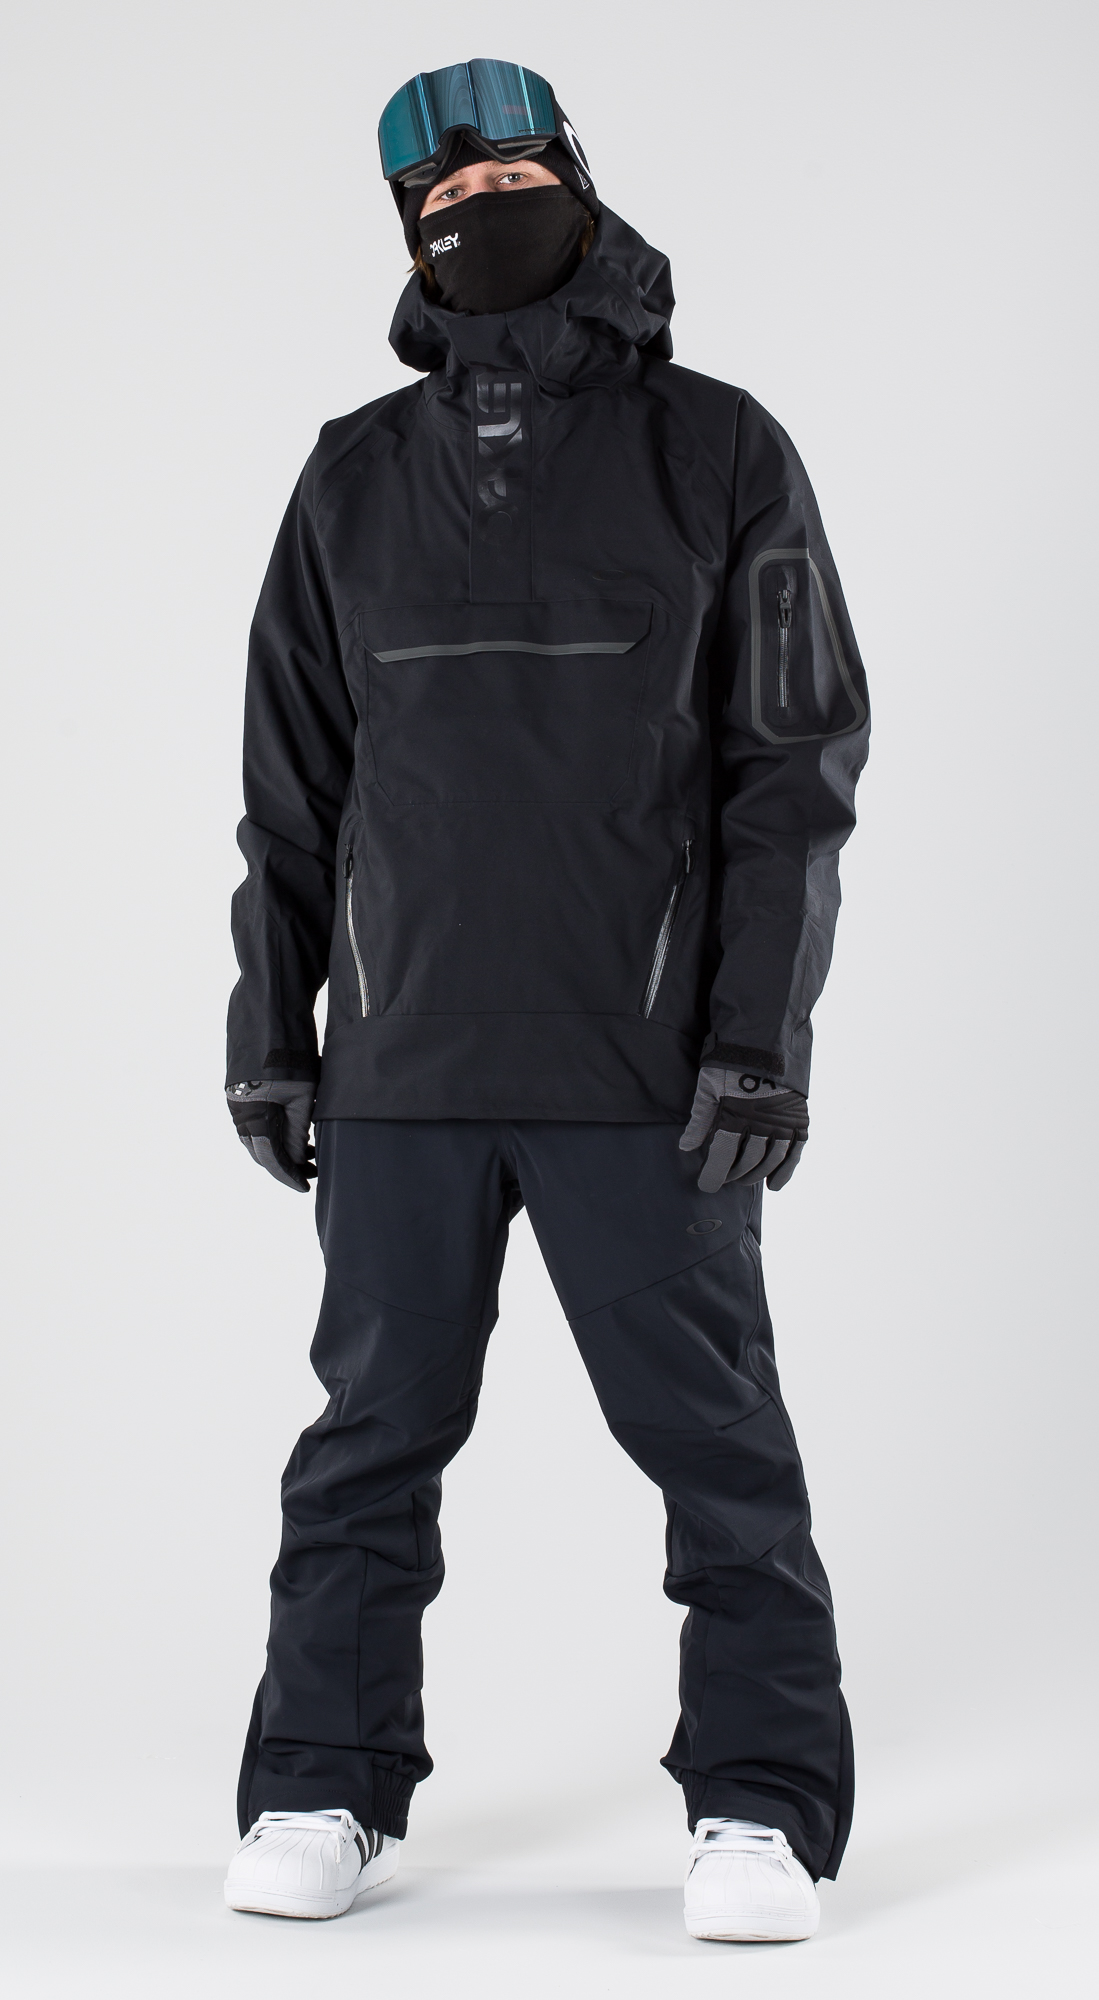 oakley snowboard clothing